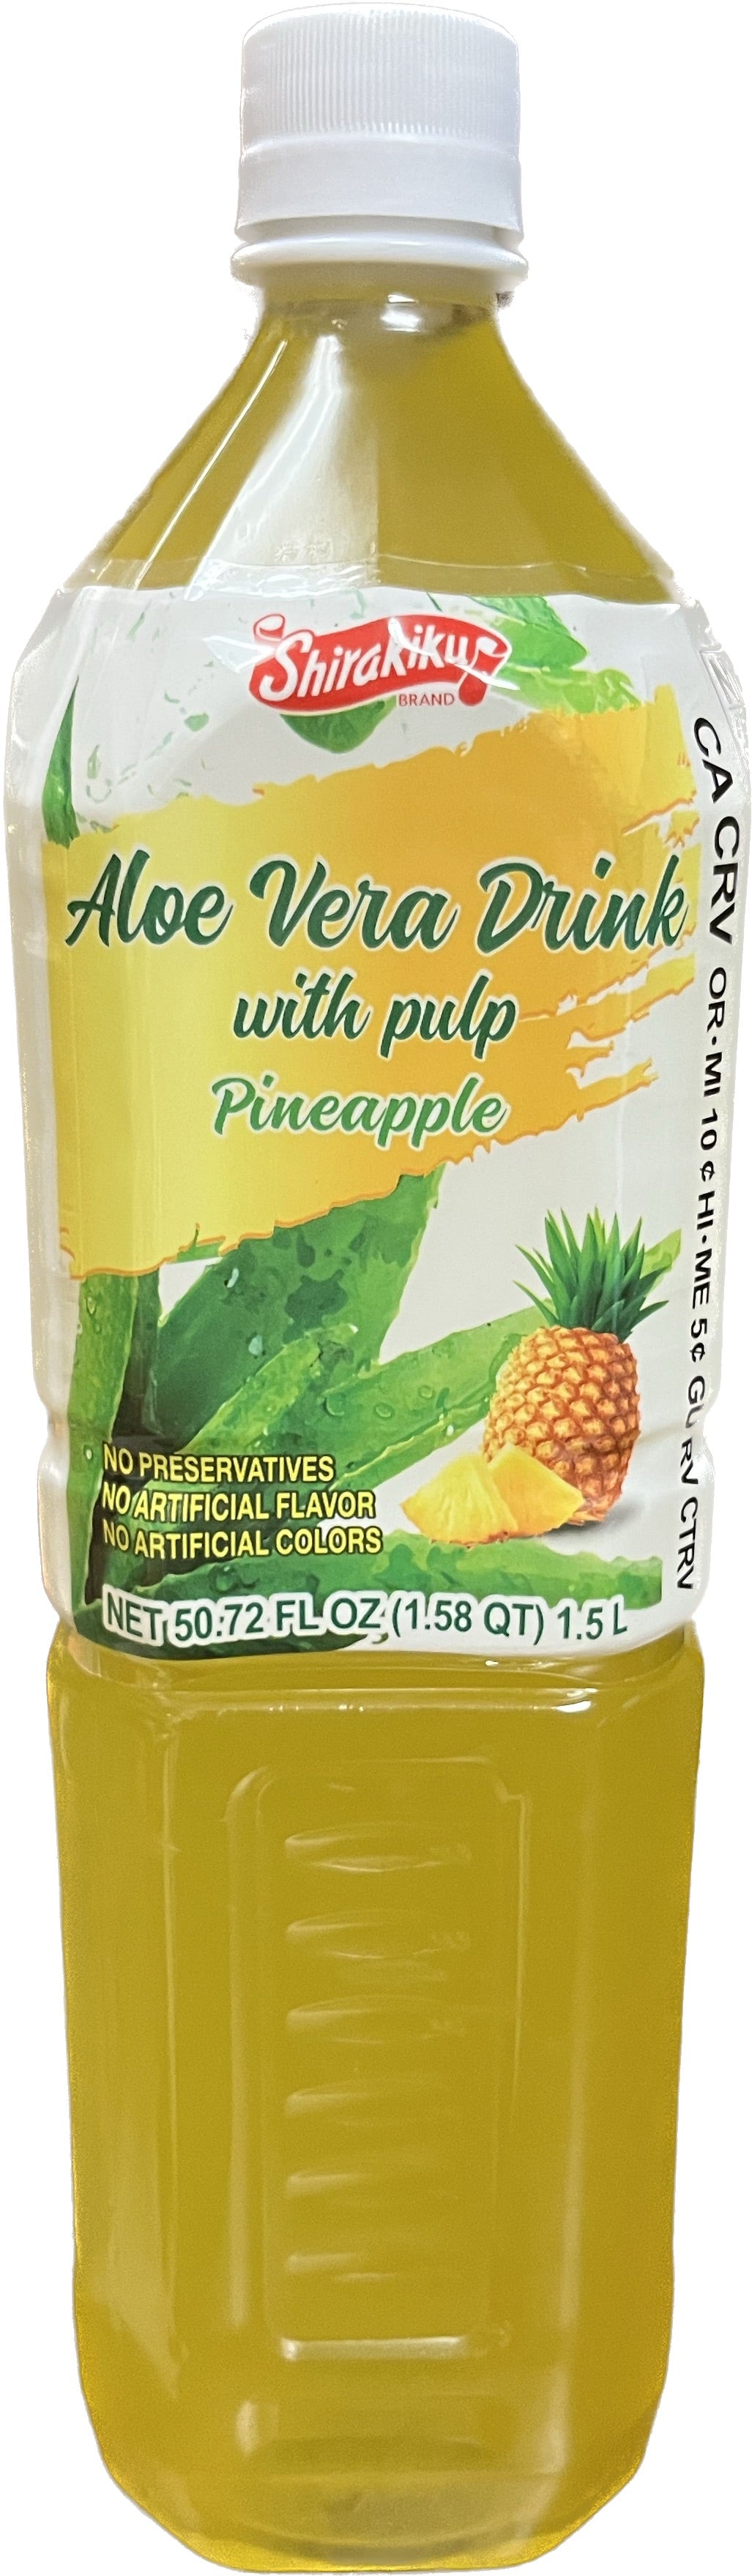 Shirakiku Pineapple Aloe Vera Drink with pulp - 1.5L